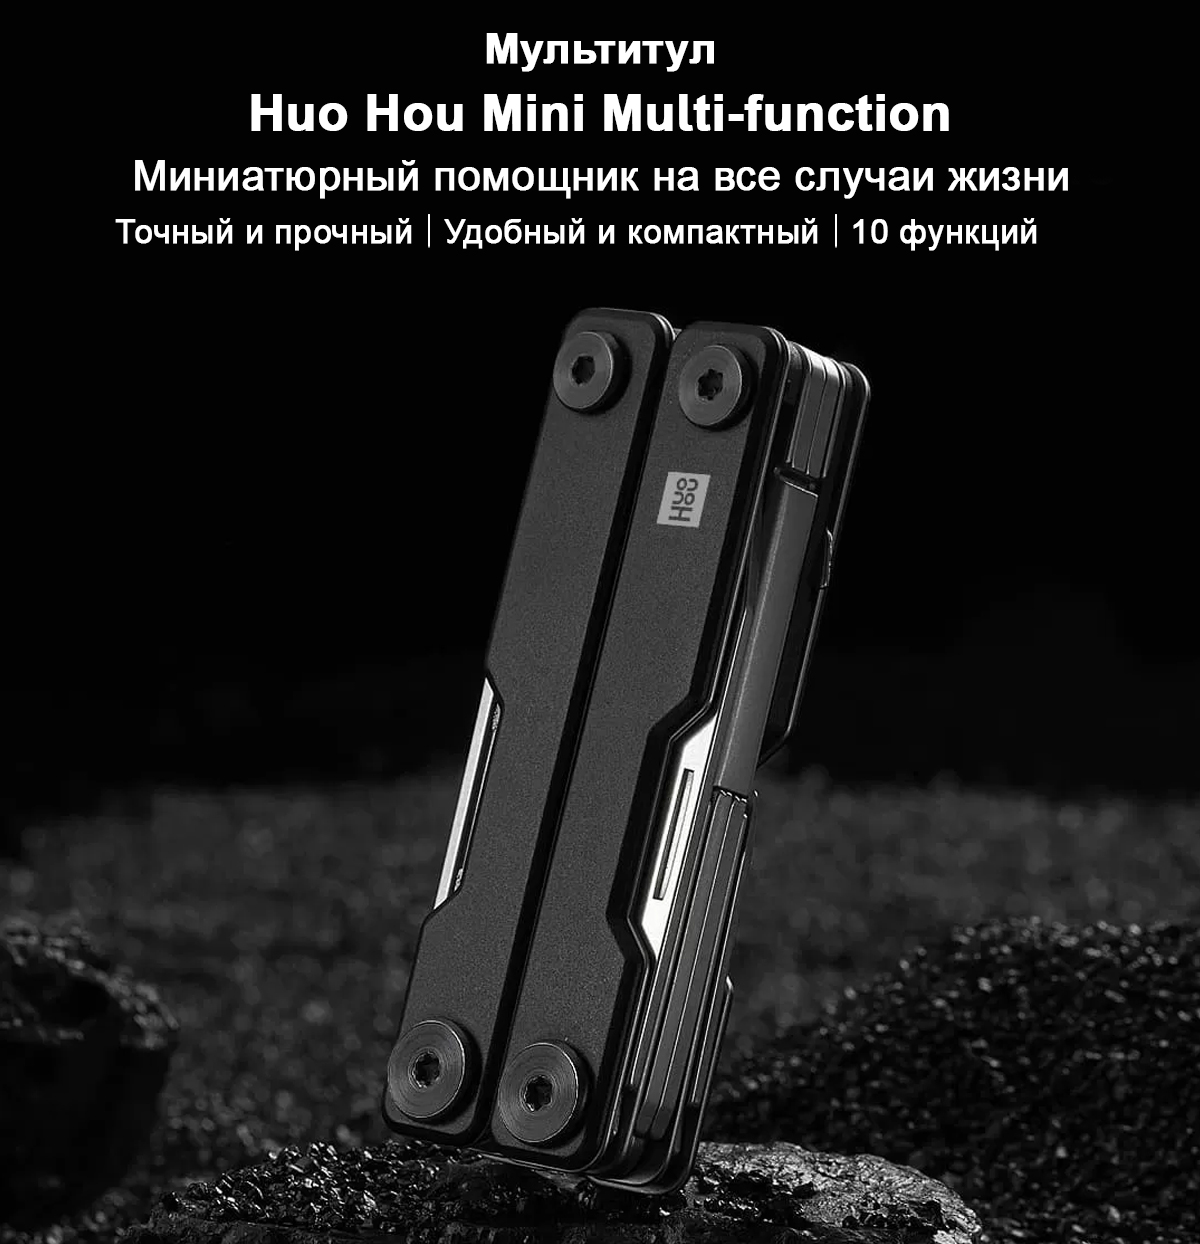 Мультитул Huo Hou Mini Multi-function HU00140